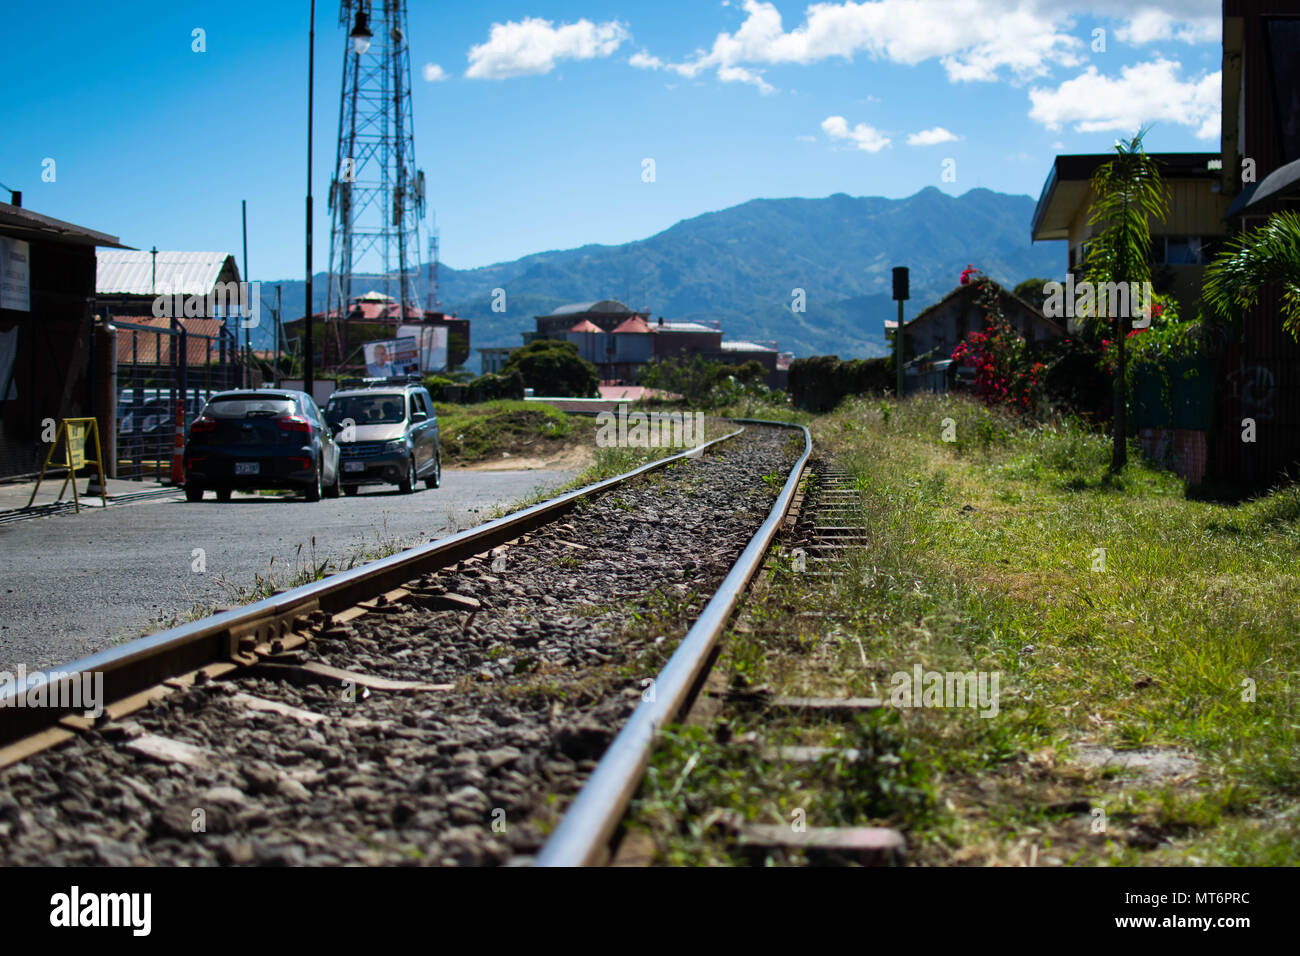 San Jose, Costa Rica. February 2, 2018. A railway running through a local neighbourhood in San Jose, Costa Rica Stock Photo